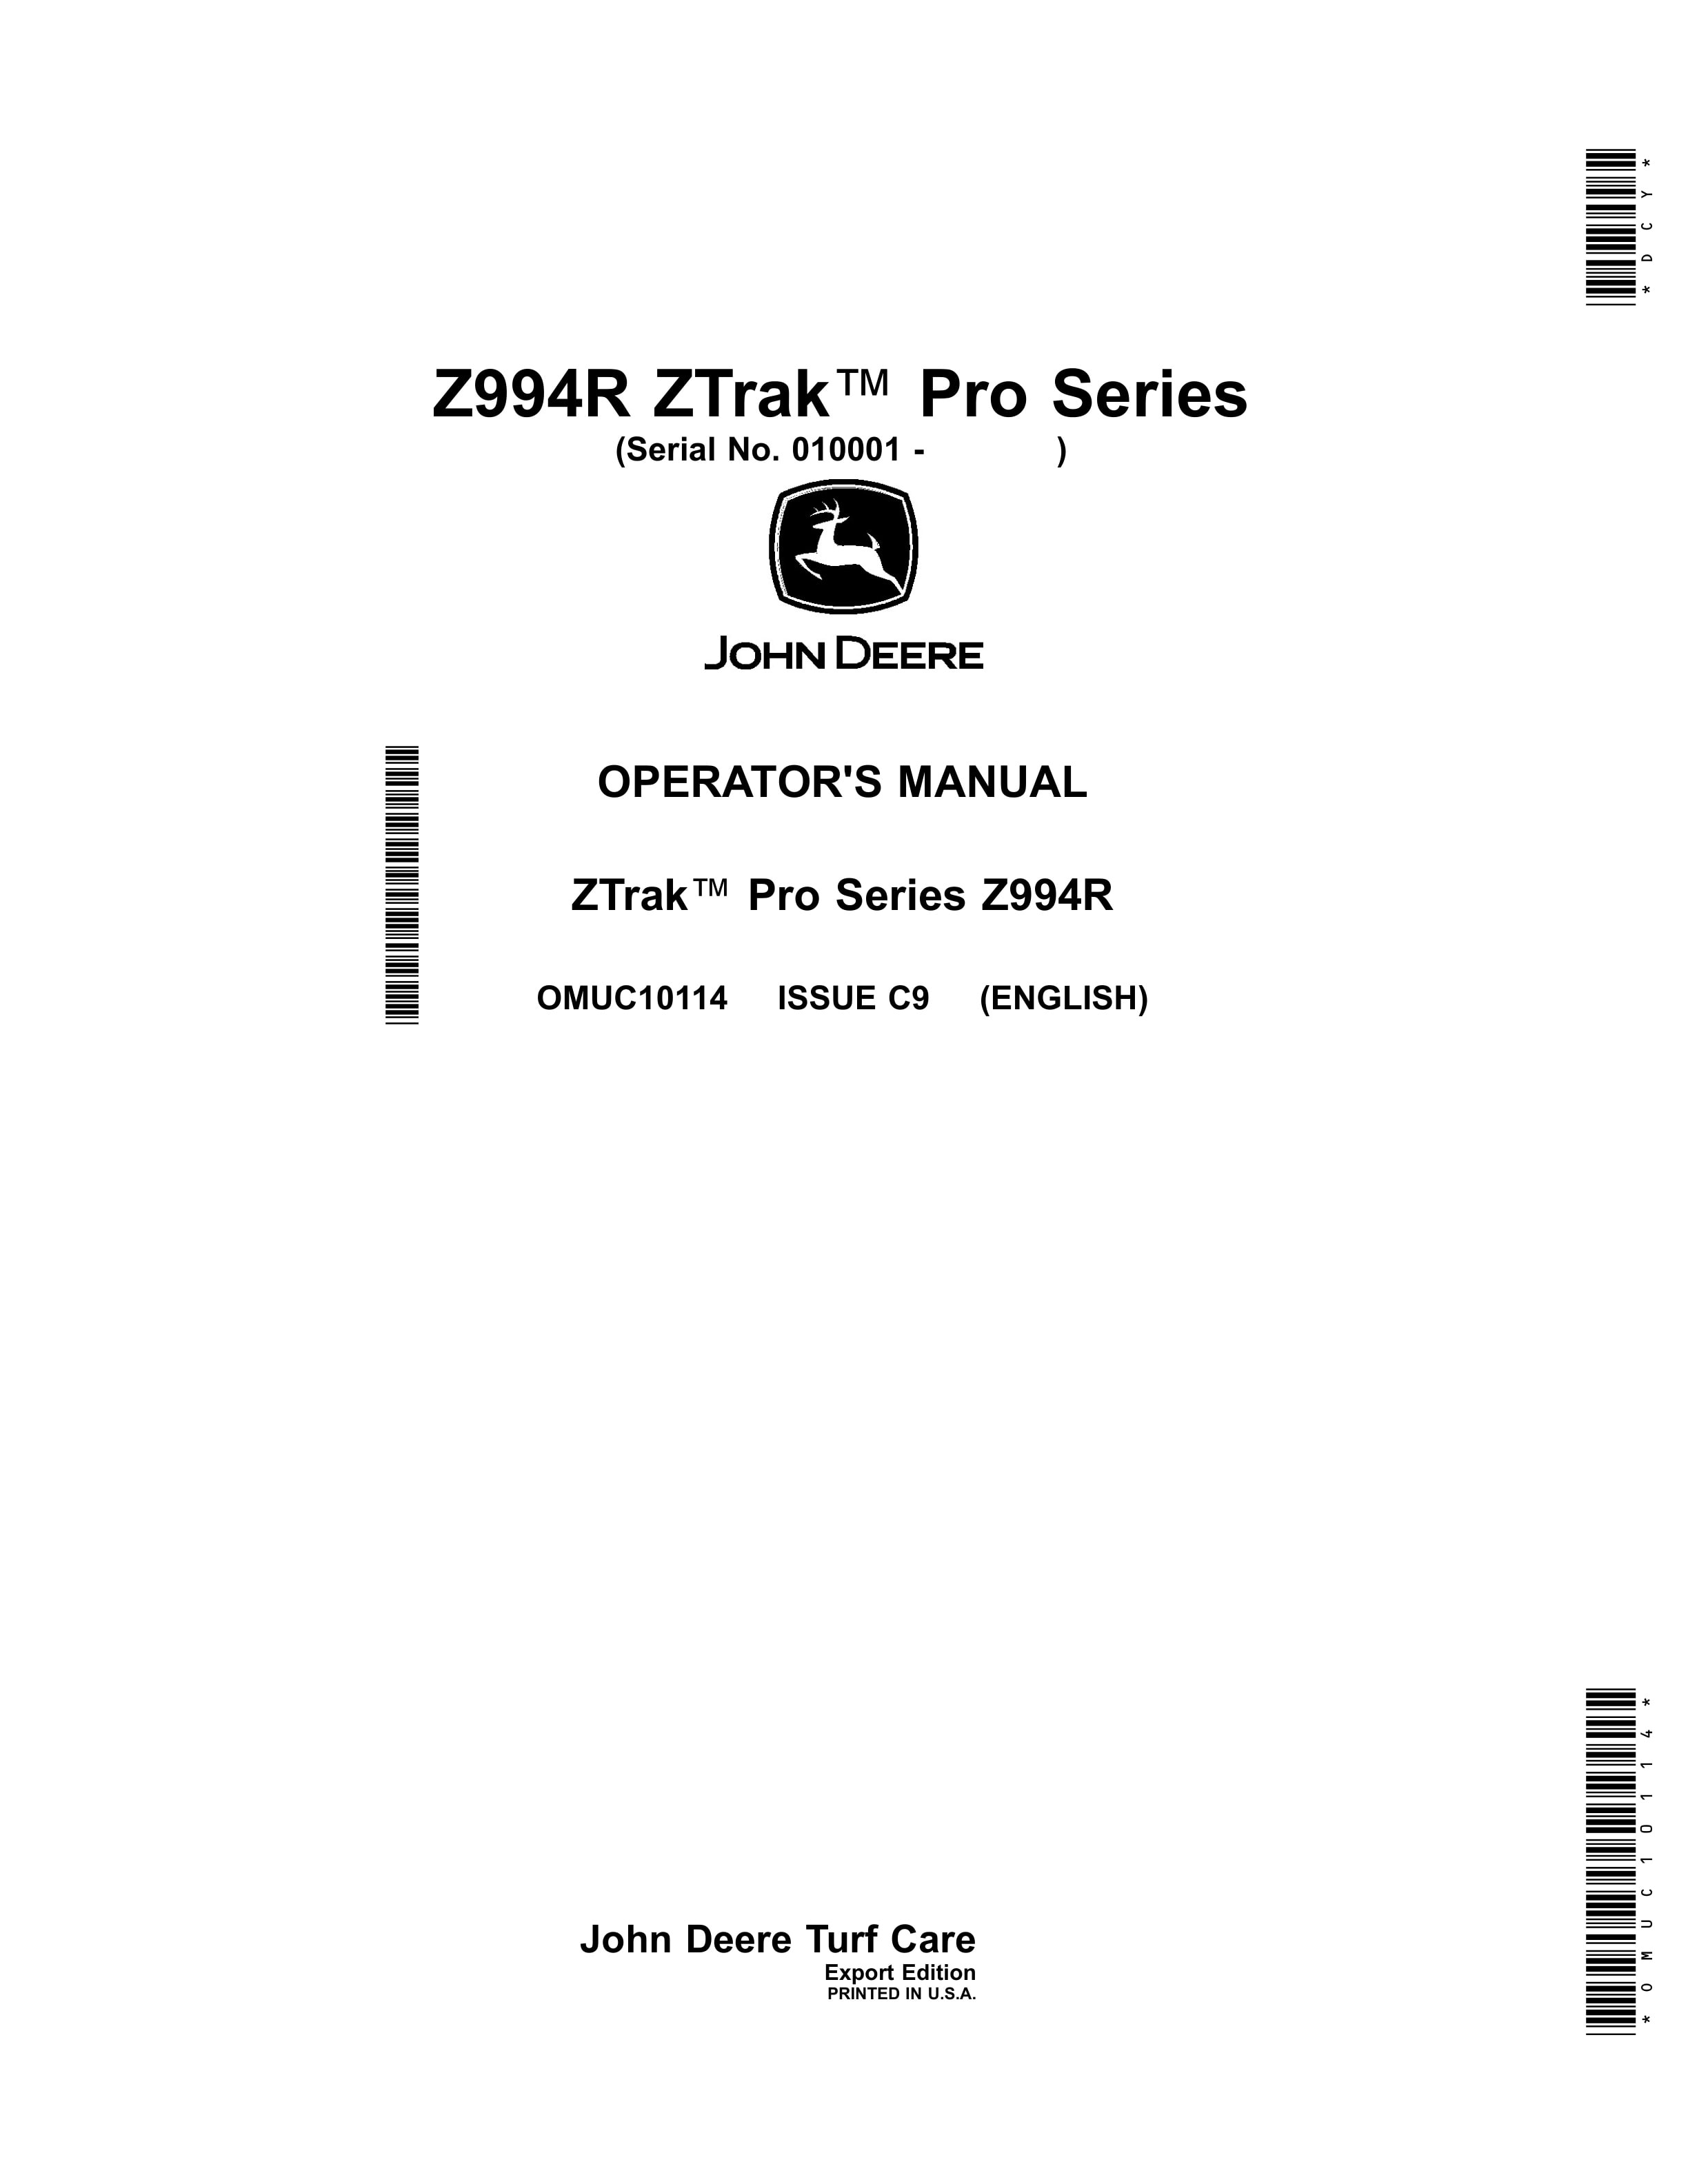 John Deere Z994R ZTrak Pro Series Operator Manual OMUC10114 1